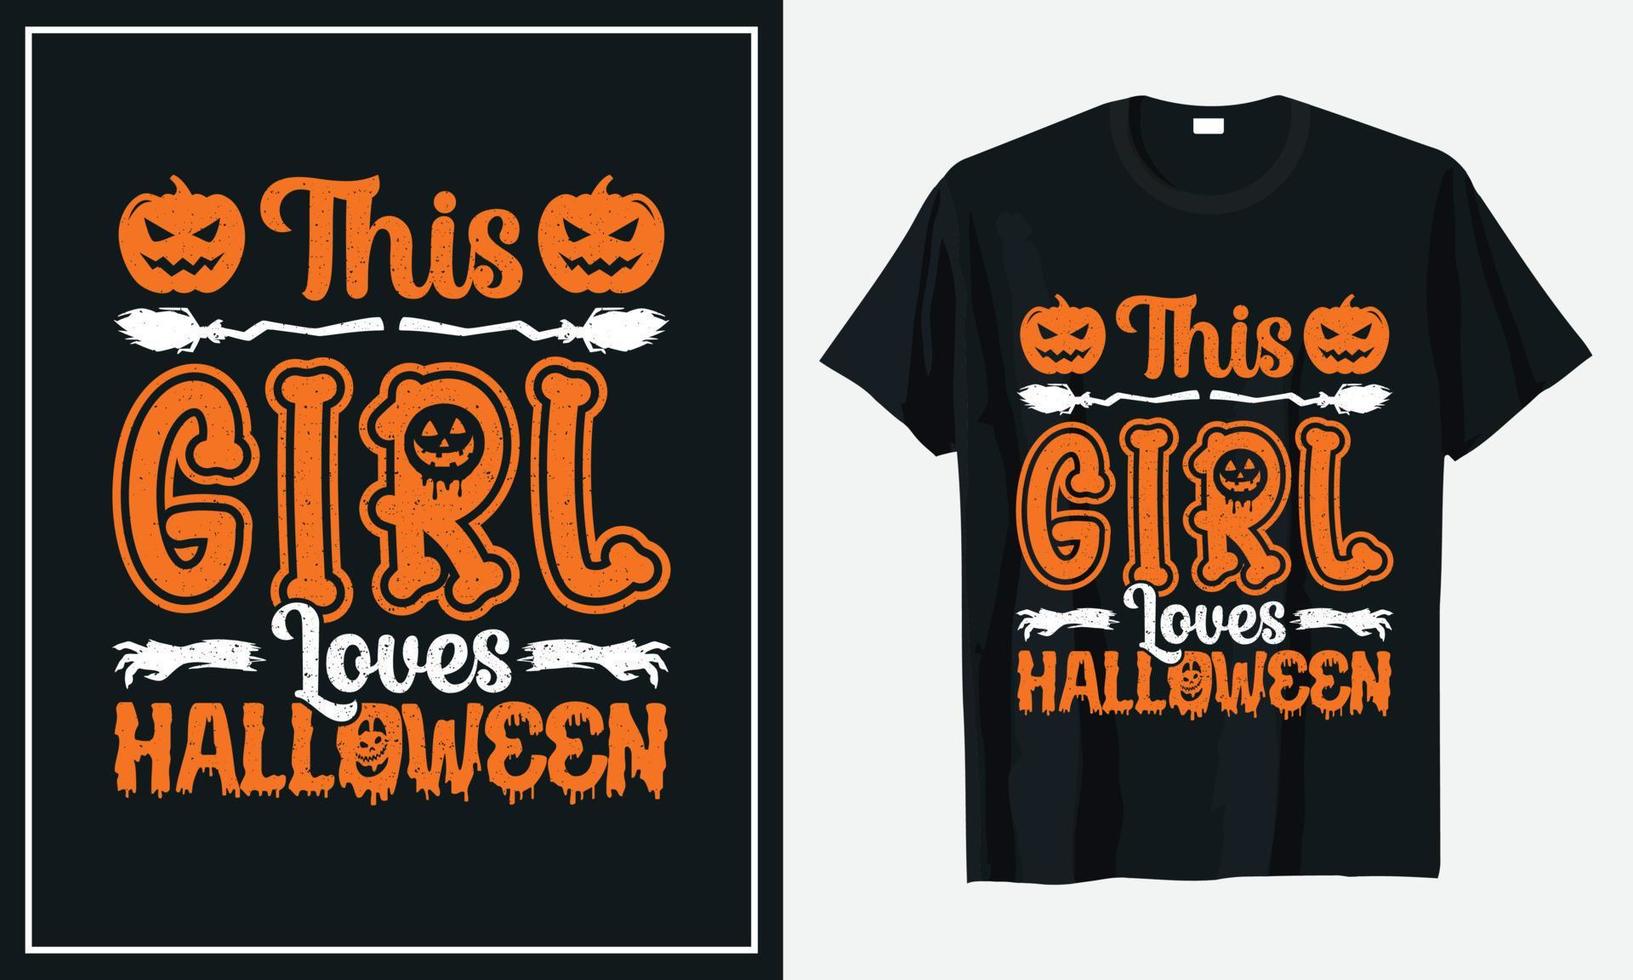 vetor de design de camiseta de halloween